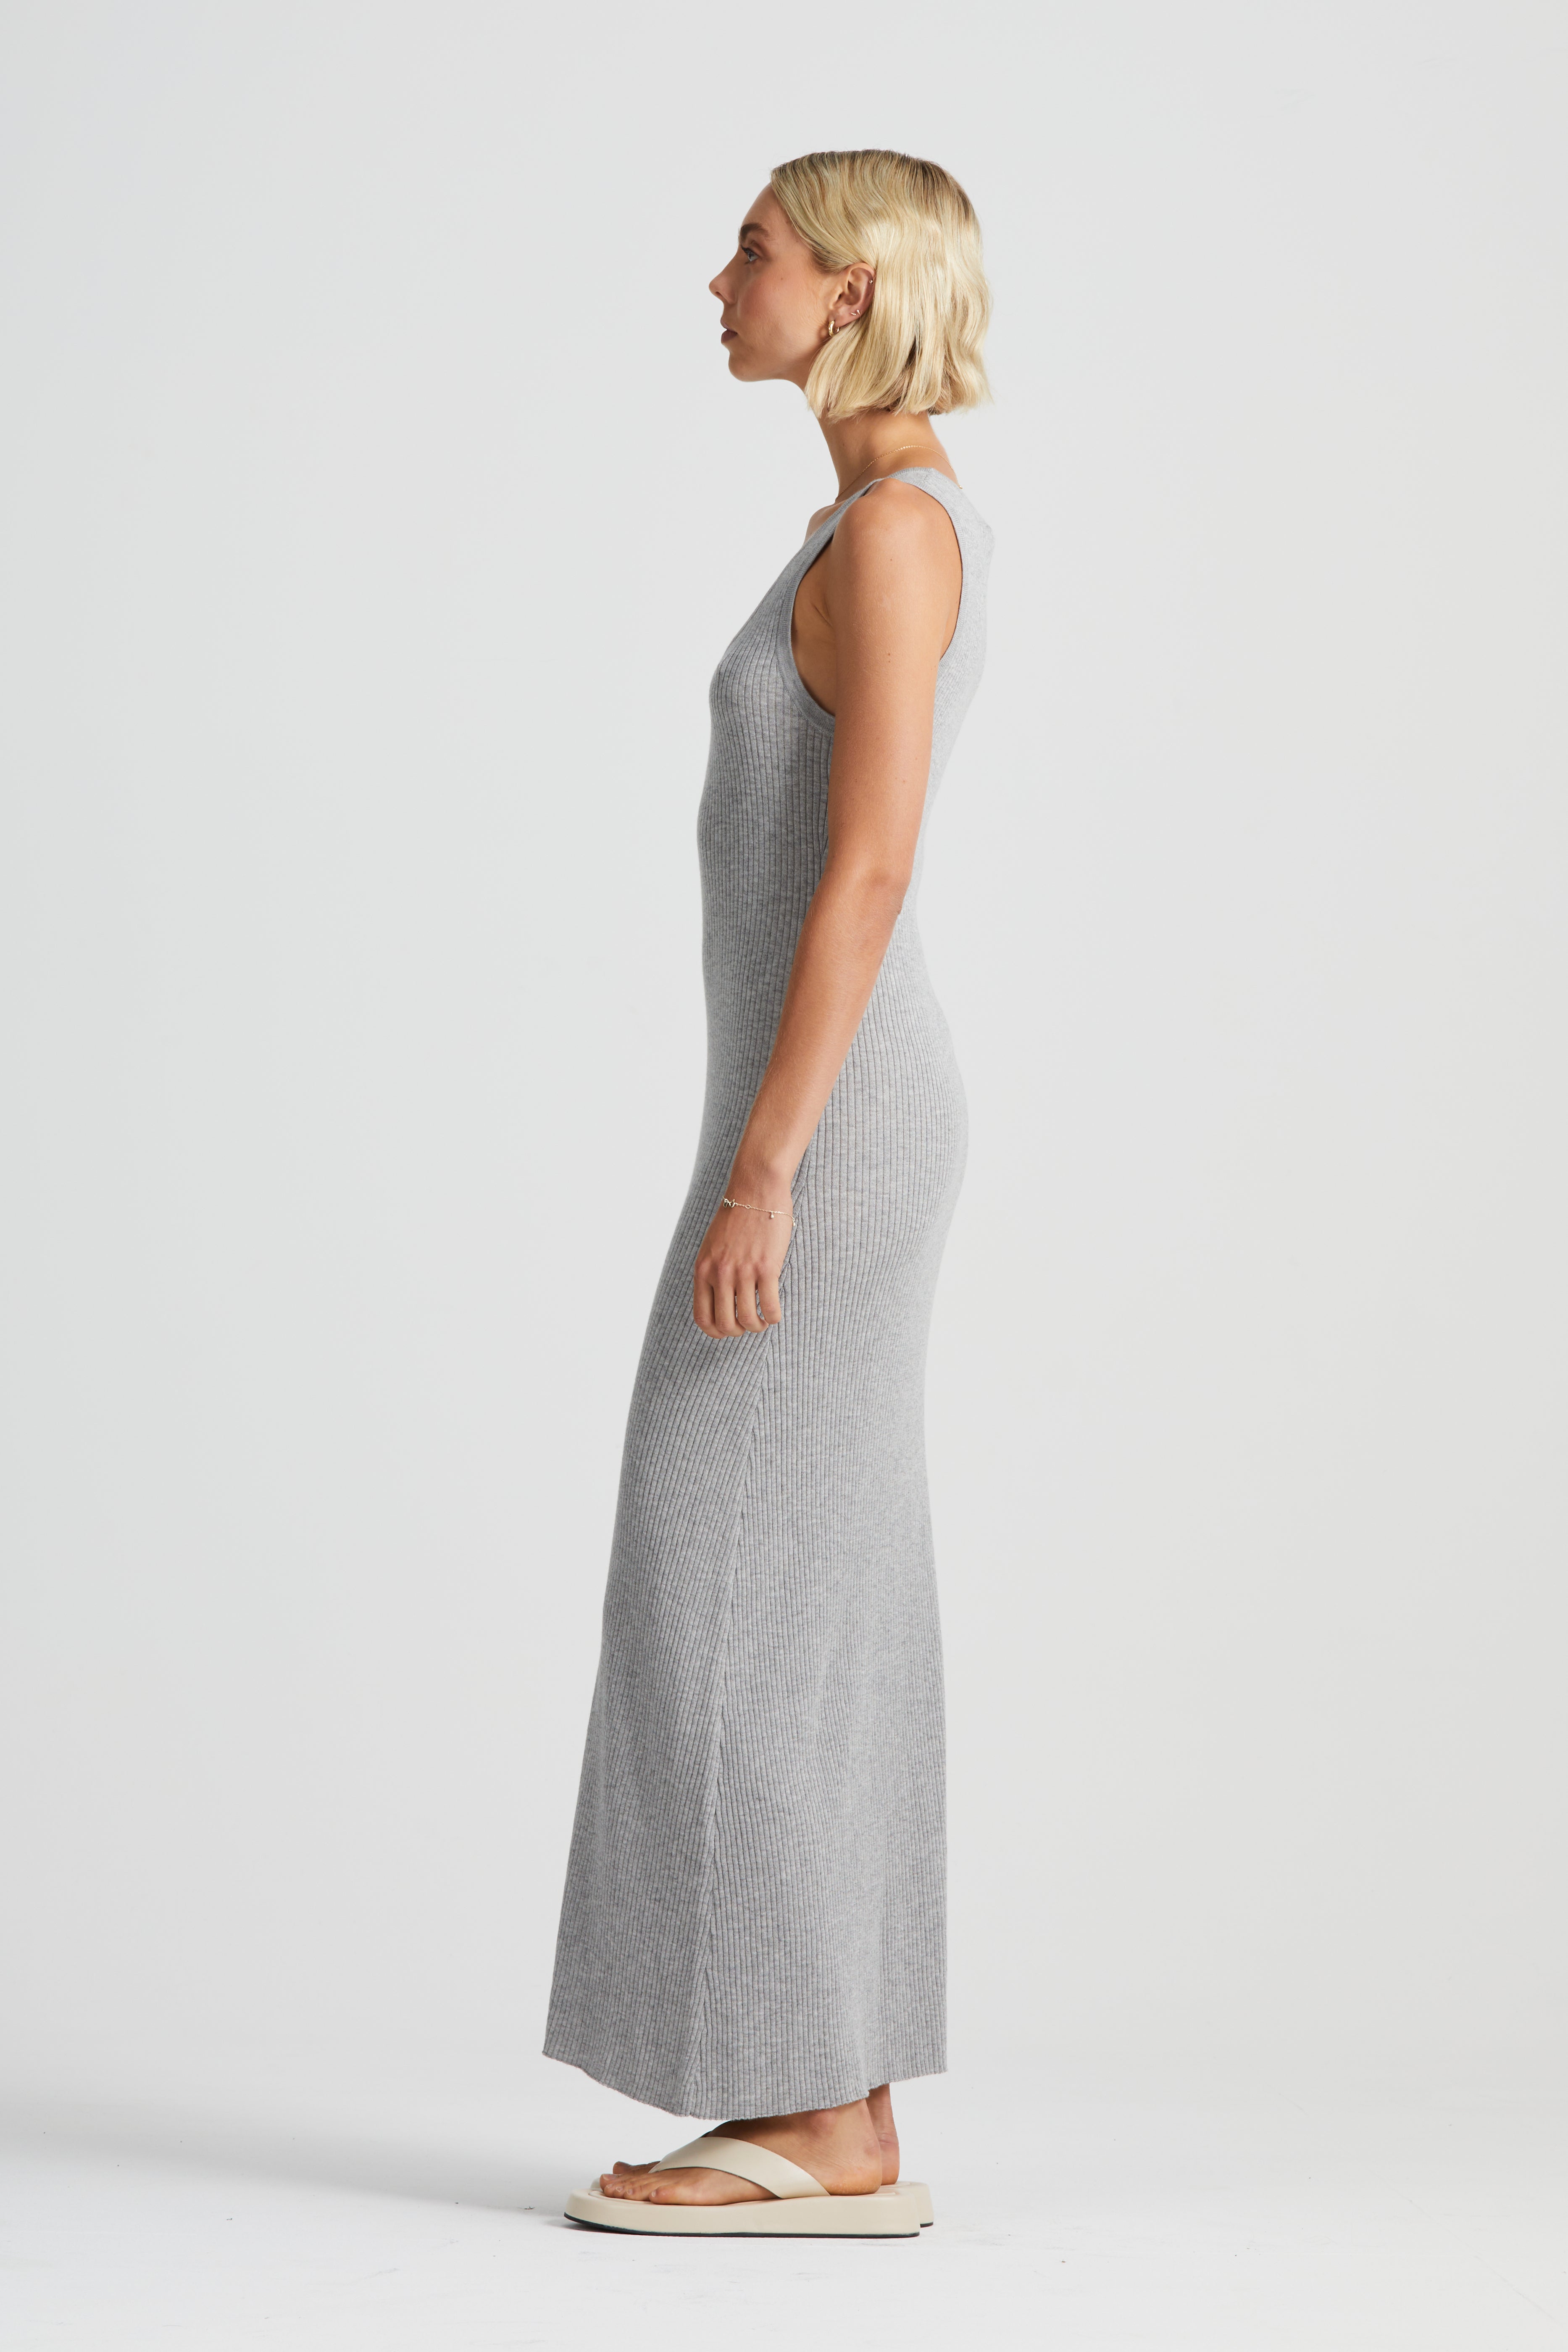 The Linear Sleeveless Knit Dress | Grey Marle $390